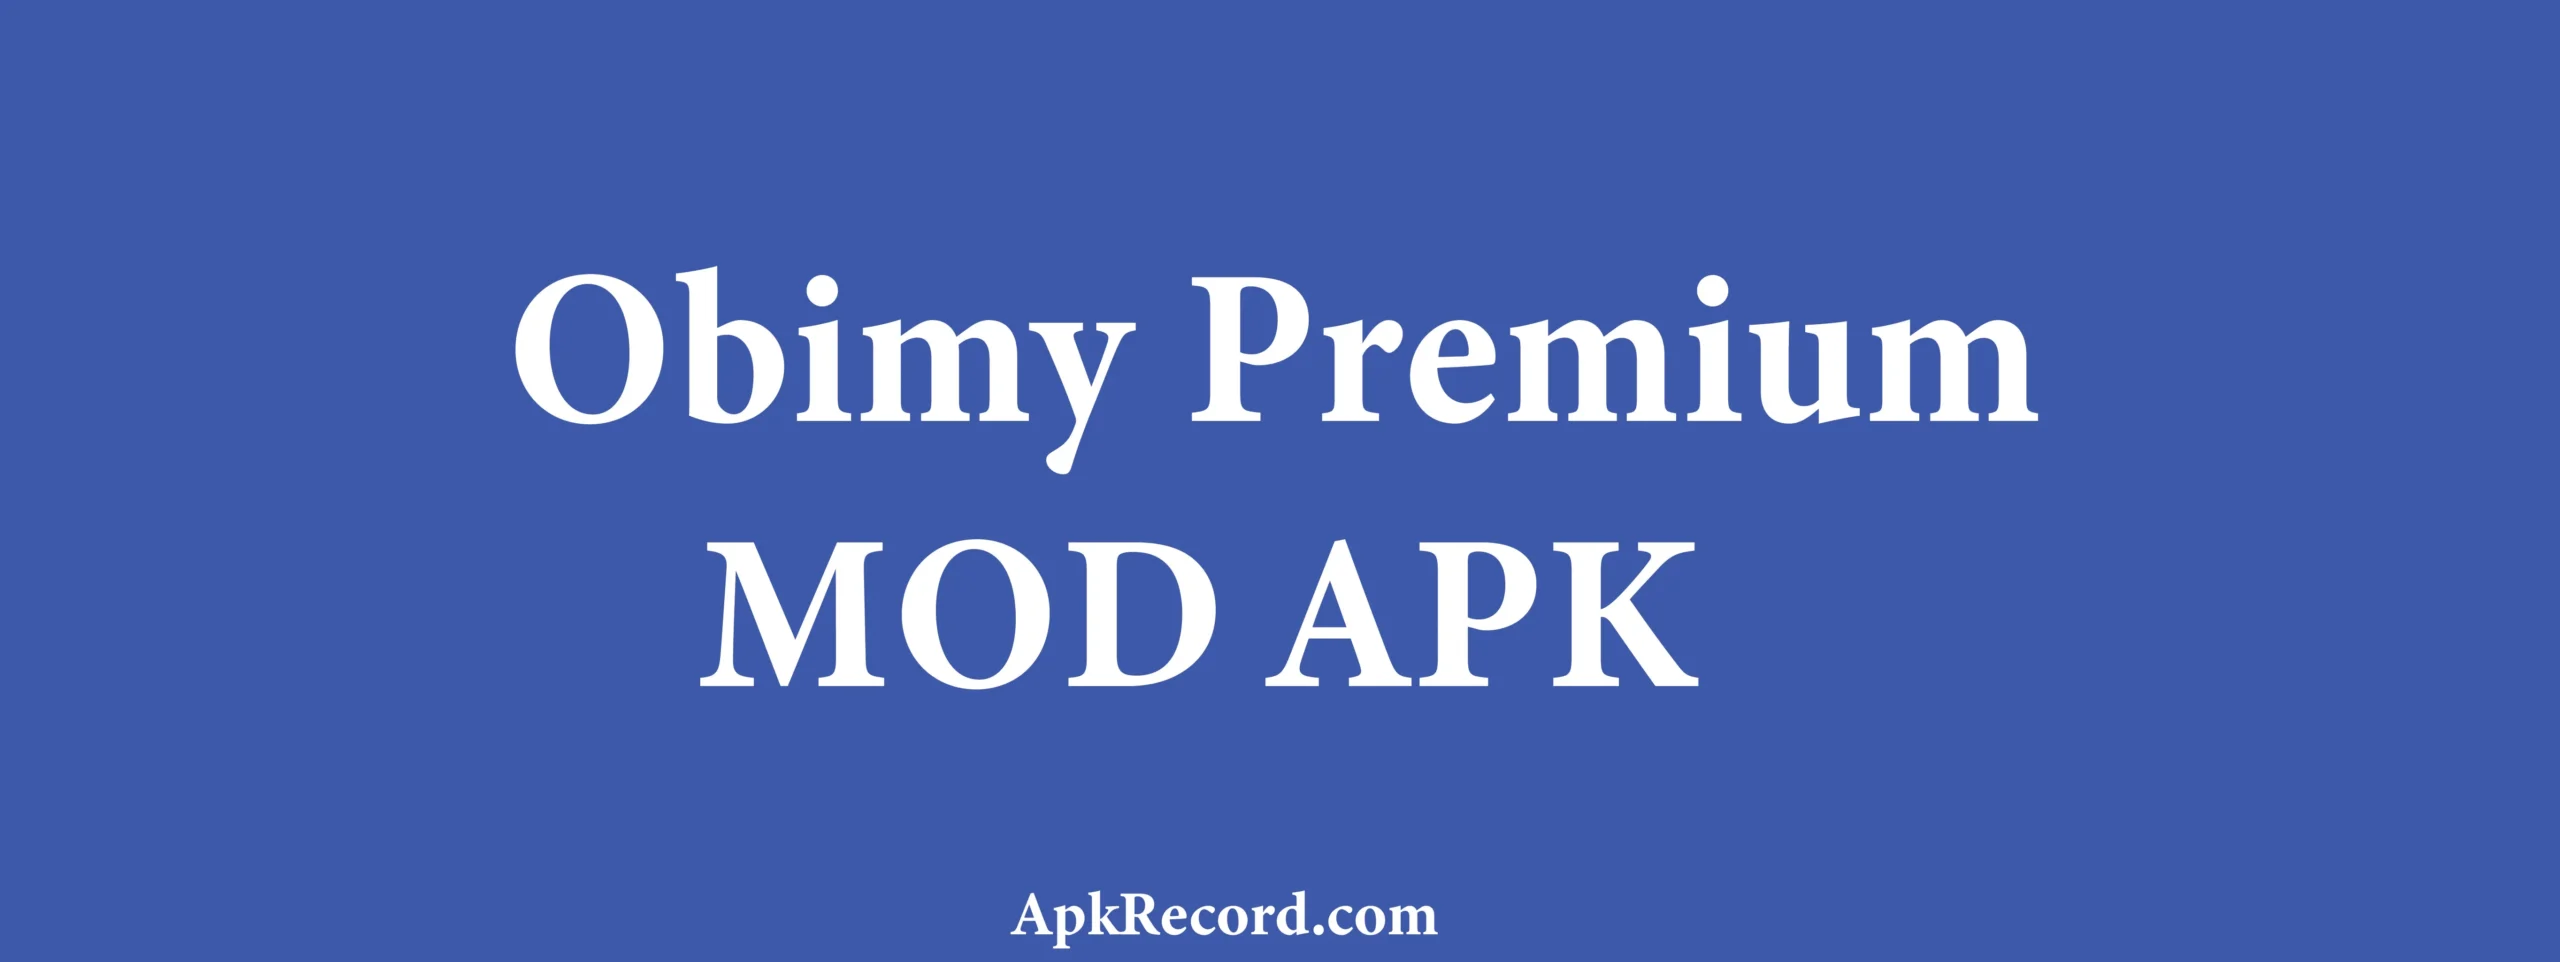 Obimy Premium MOD APK V4.11.1